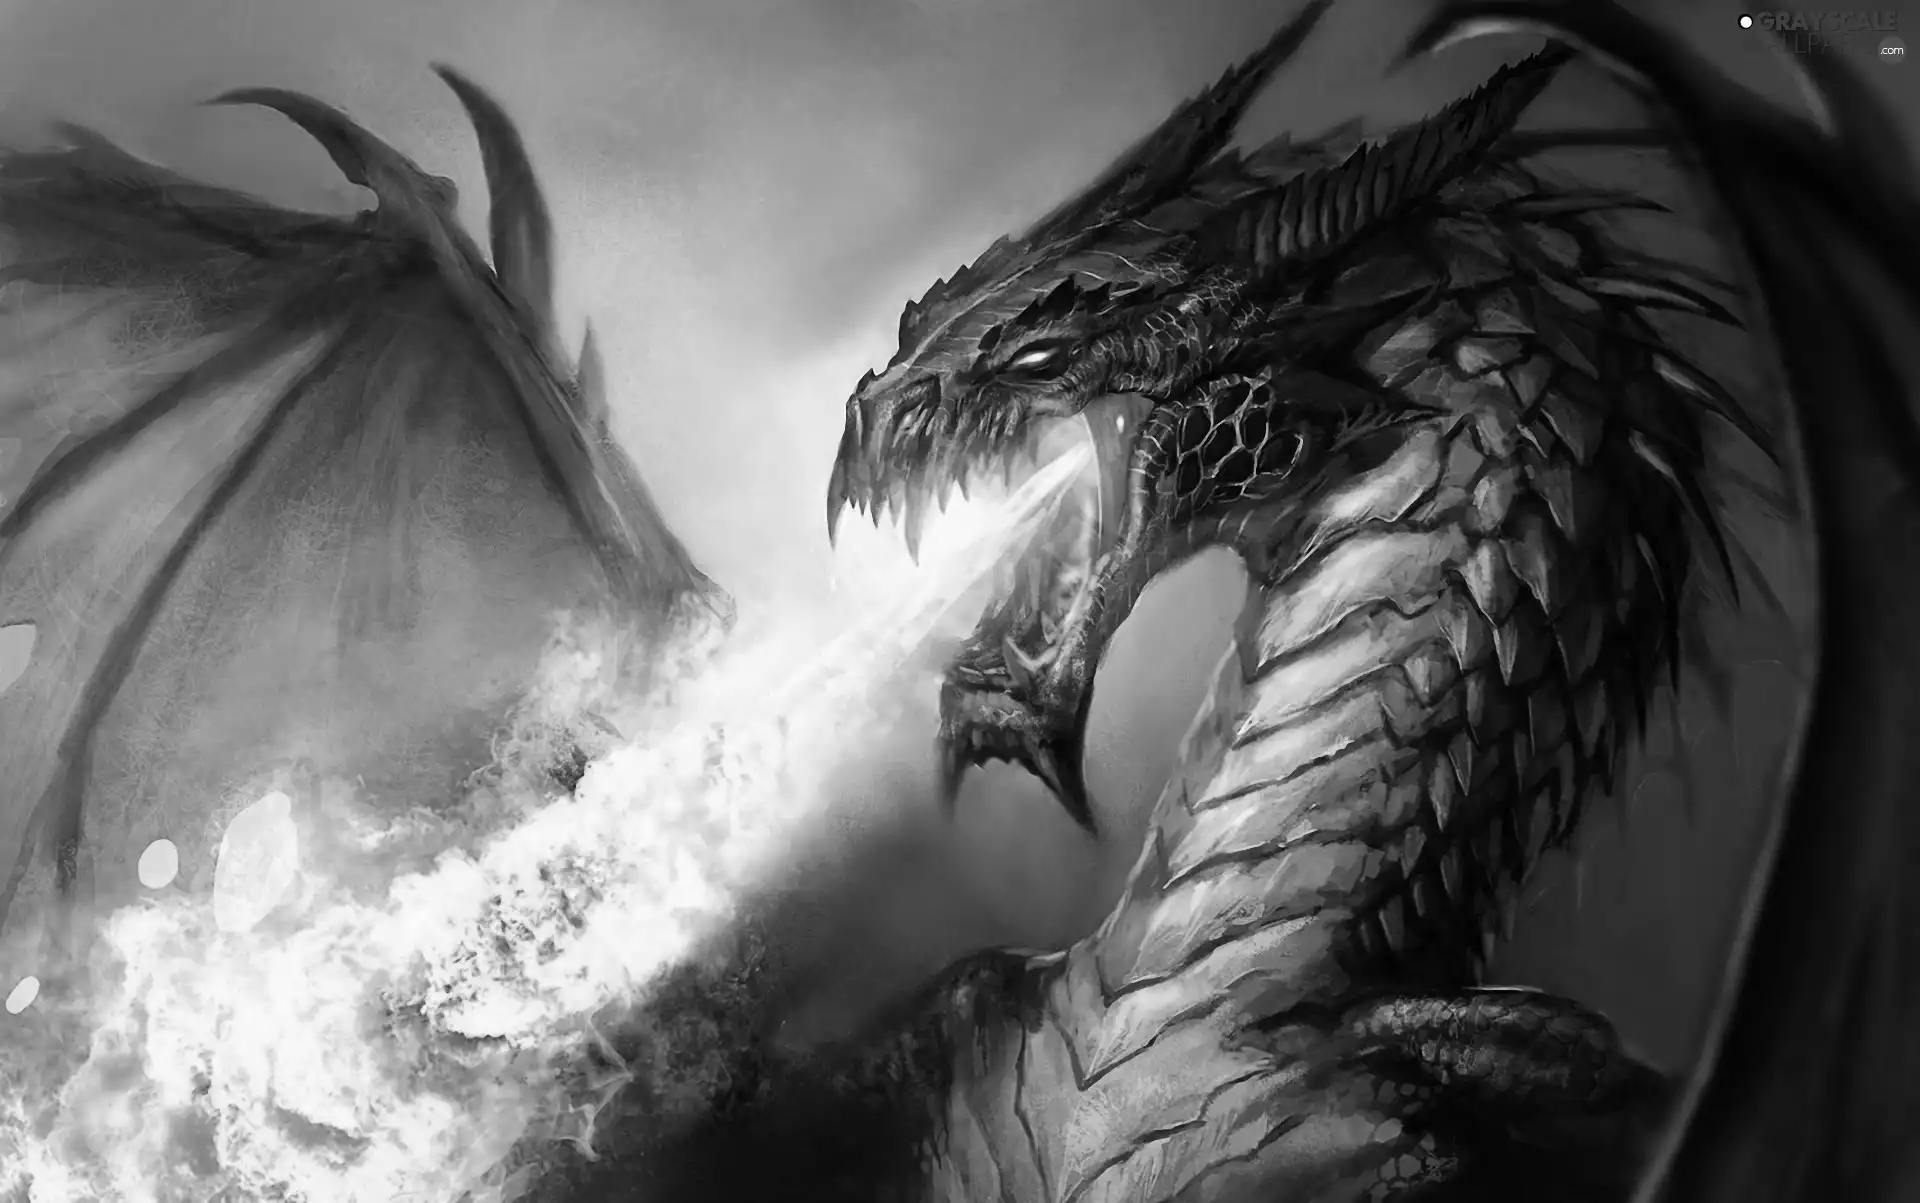 Dragon, Big Fire